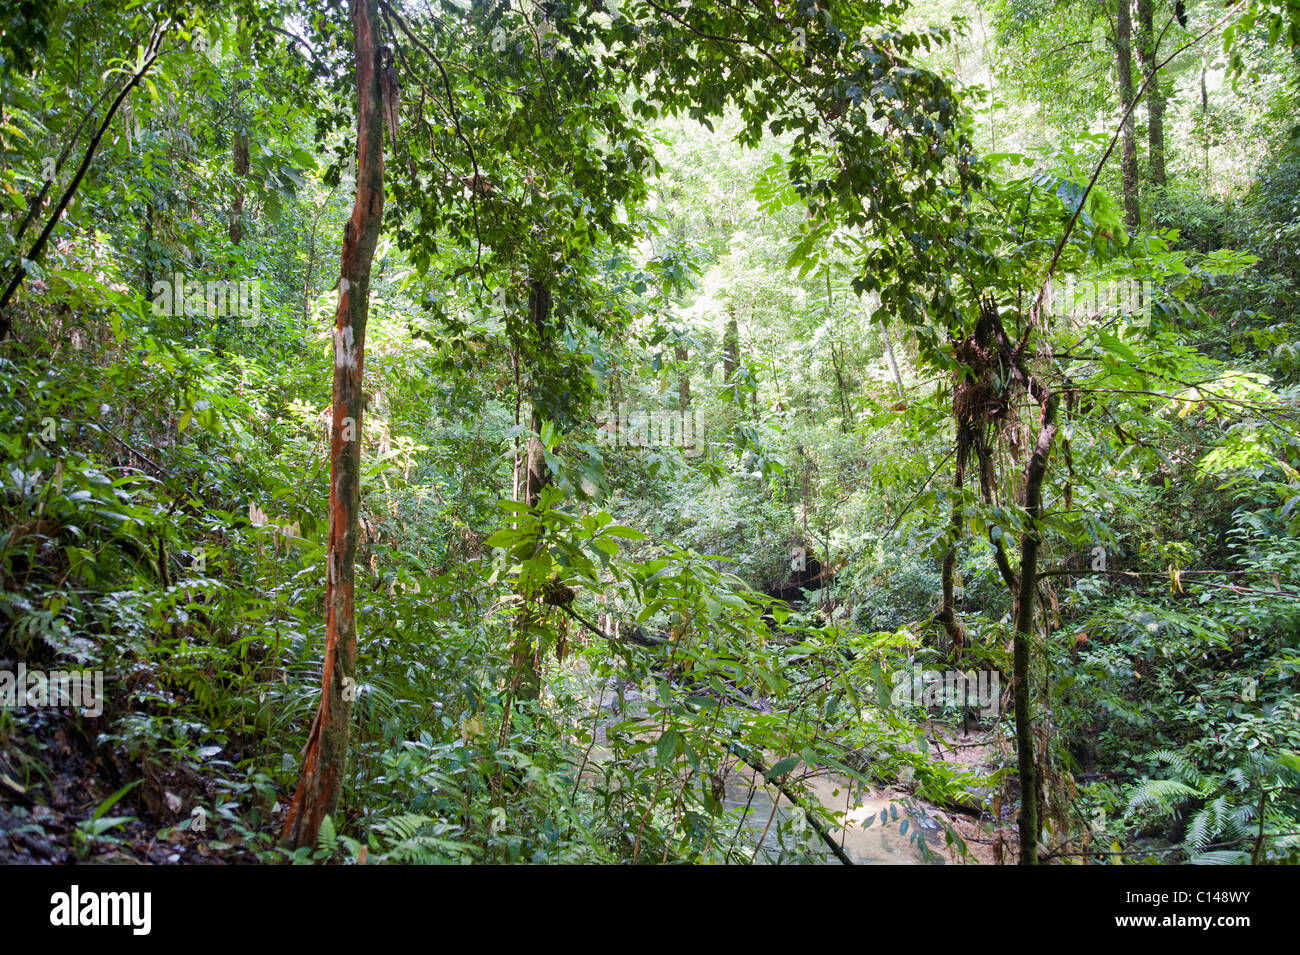 Amazon Rainforest, Brazil, South America. Stock Photo